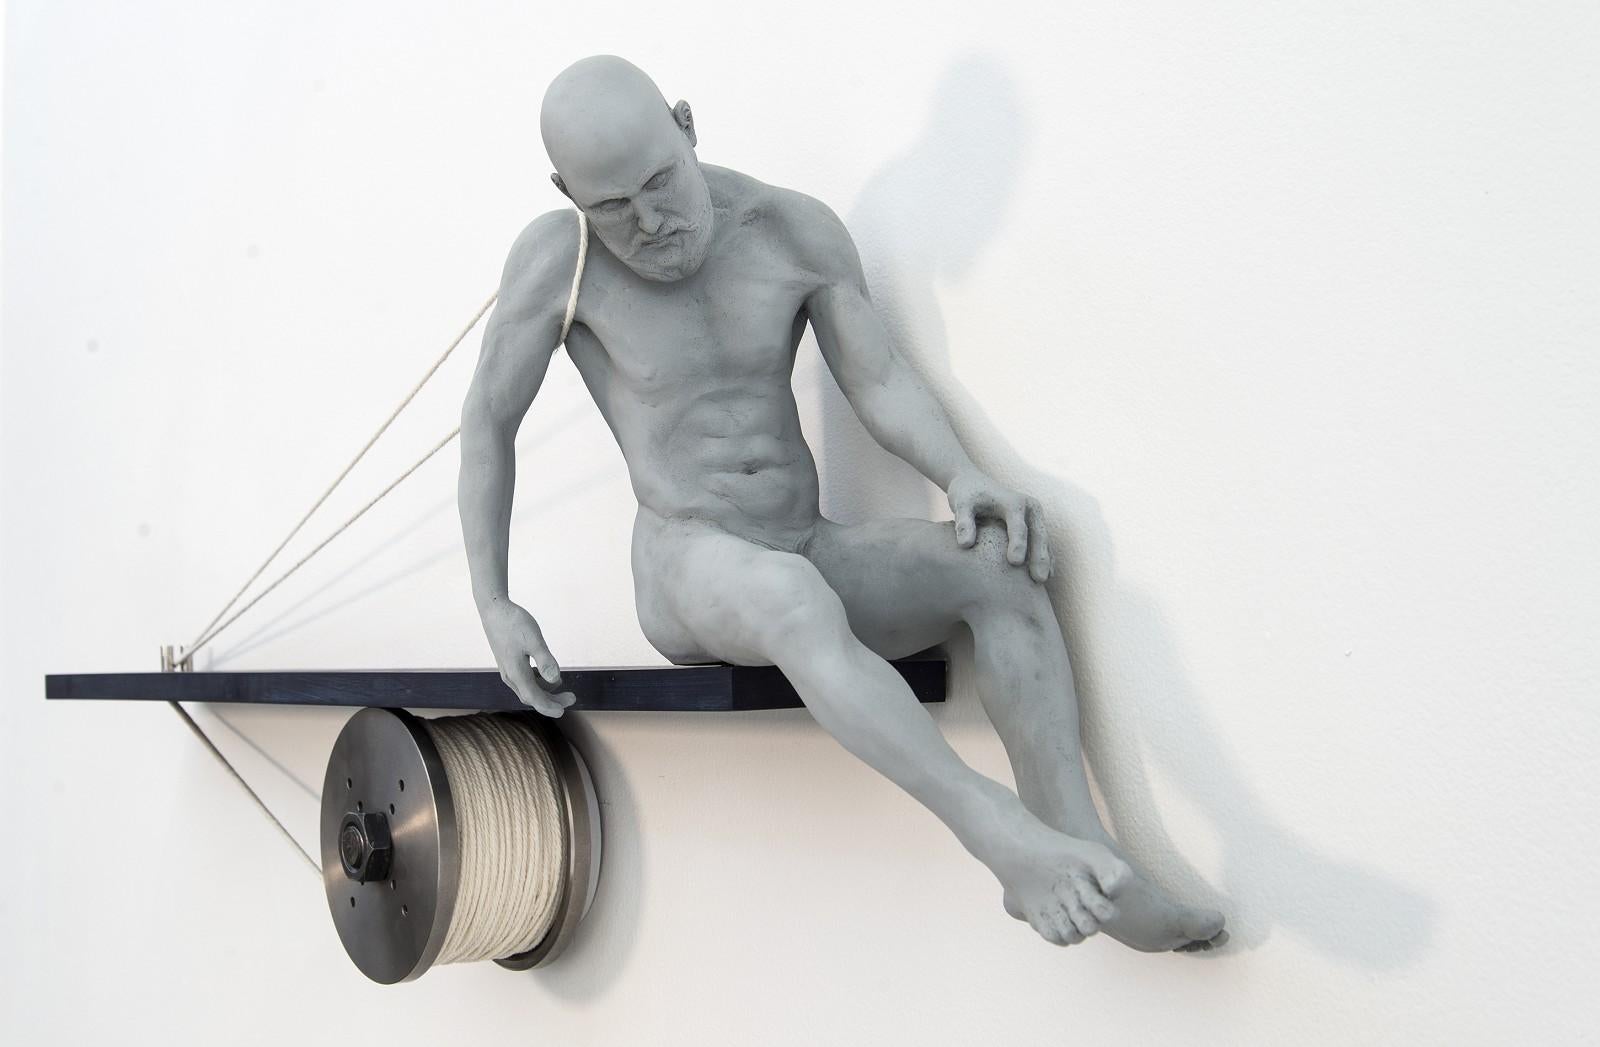 Tethered 1/9 - homme, posé, nu, figure, mixed media, sculpture murale - Sculpture de W.W. Hung